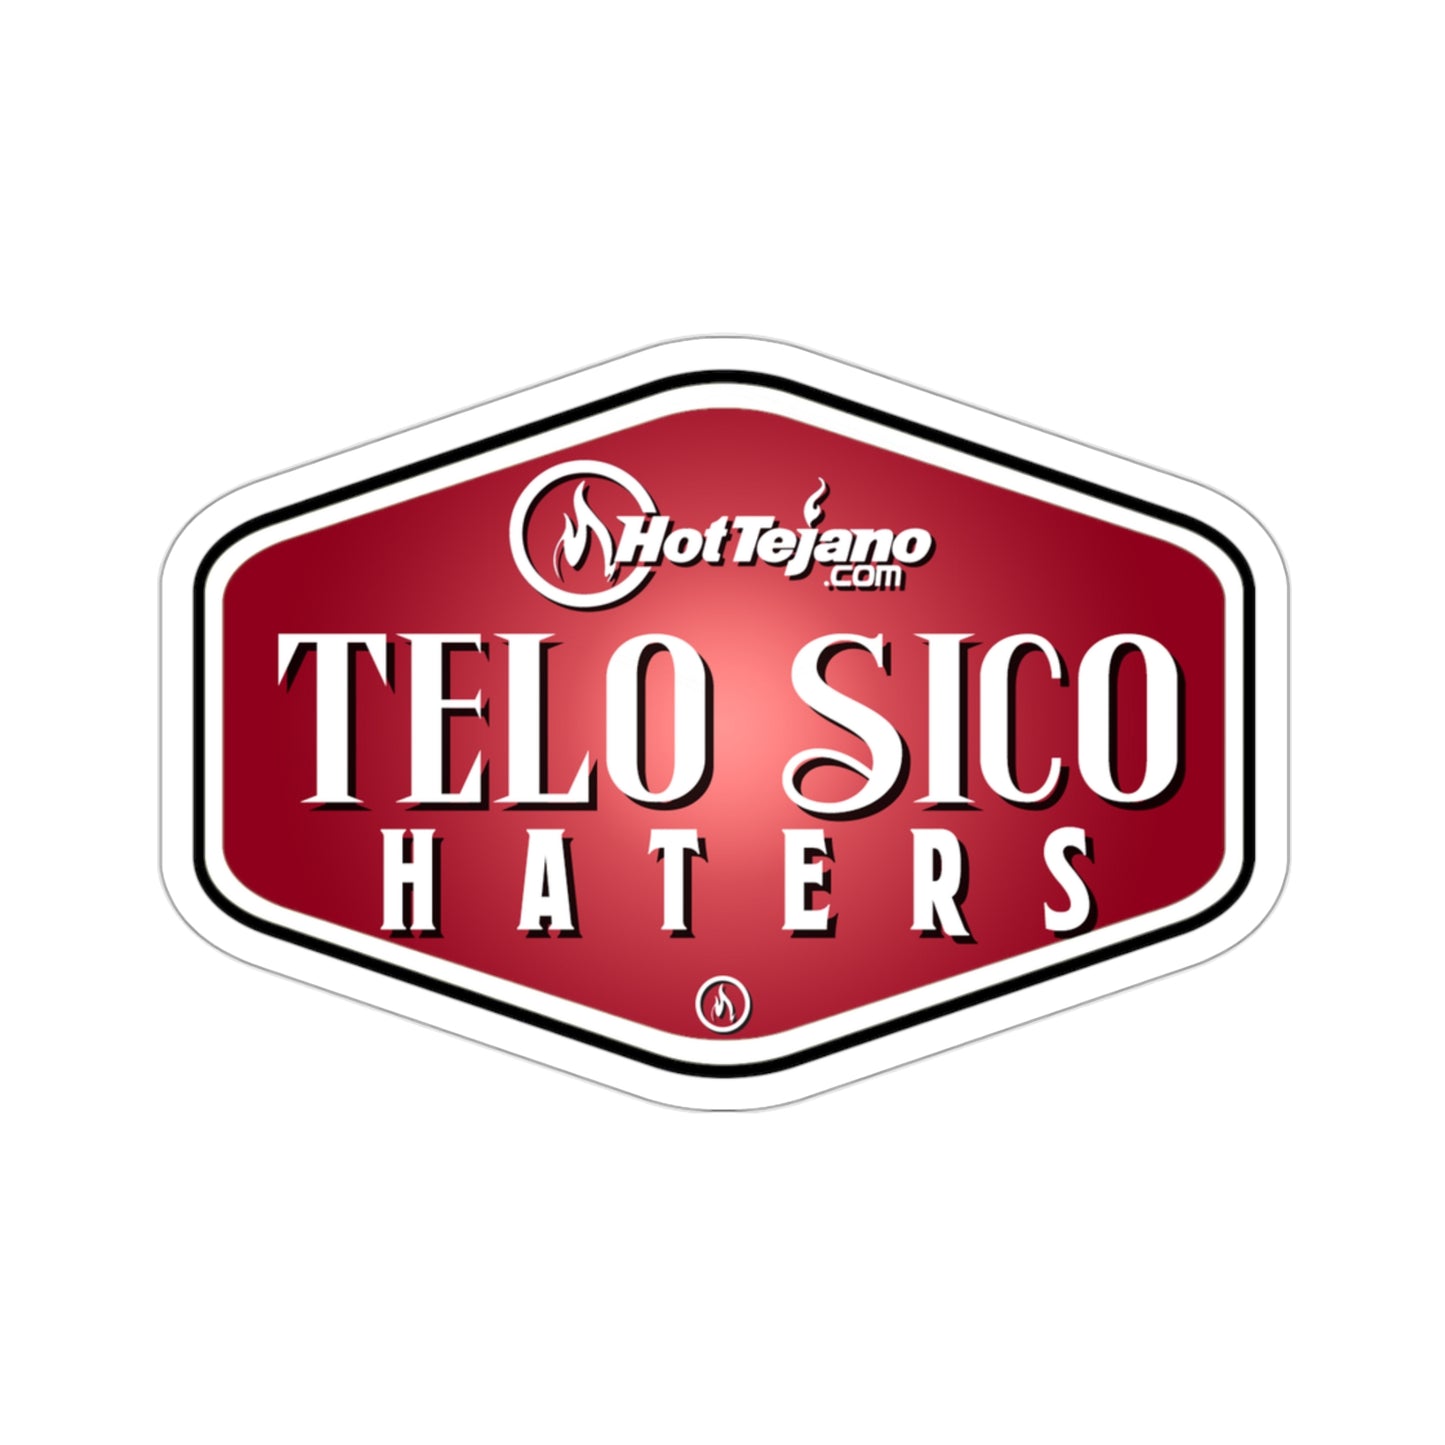 HotTejano Telo Sico Haters Sticker